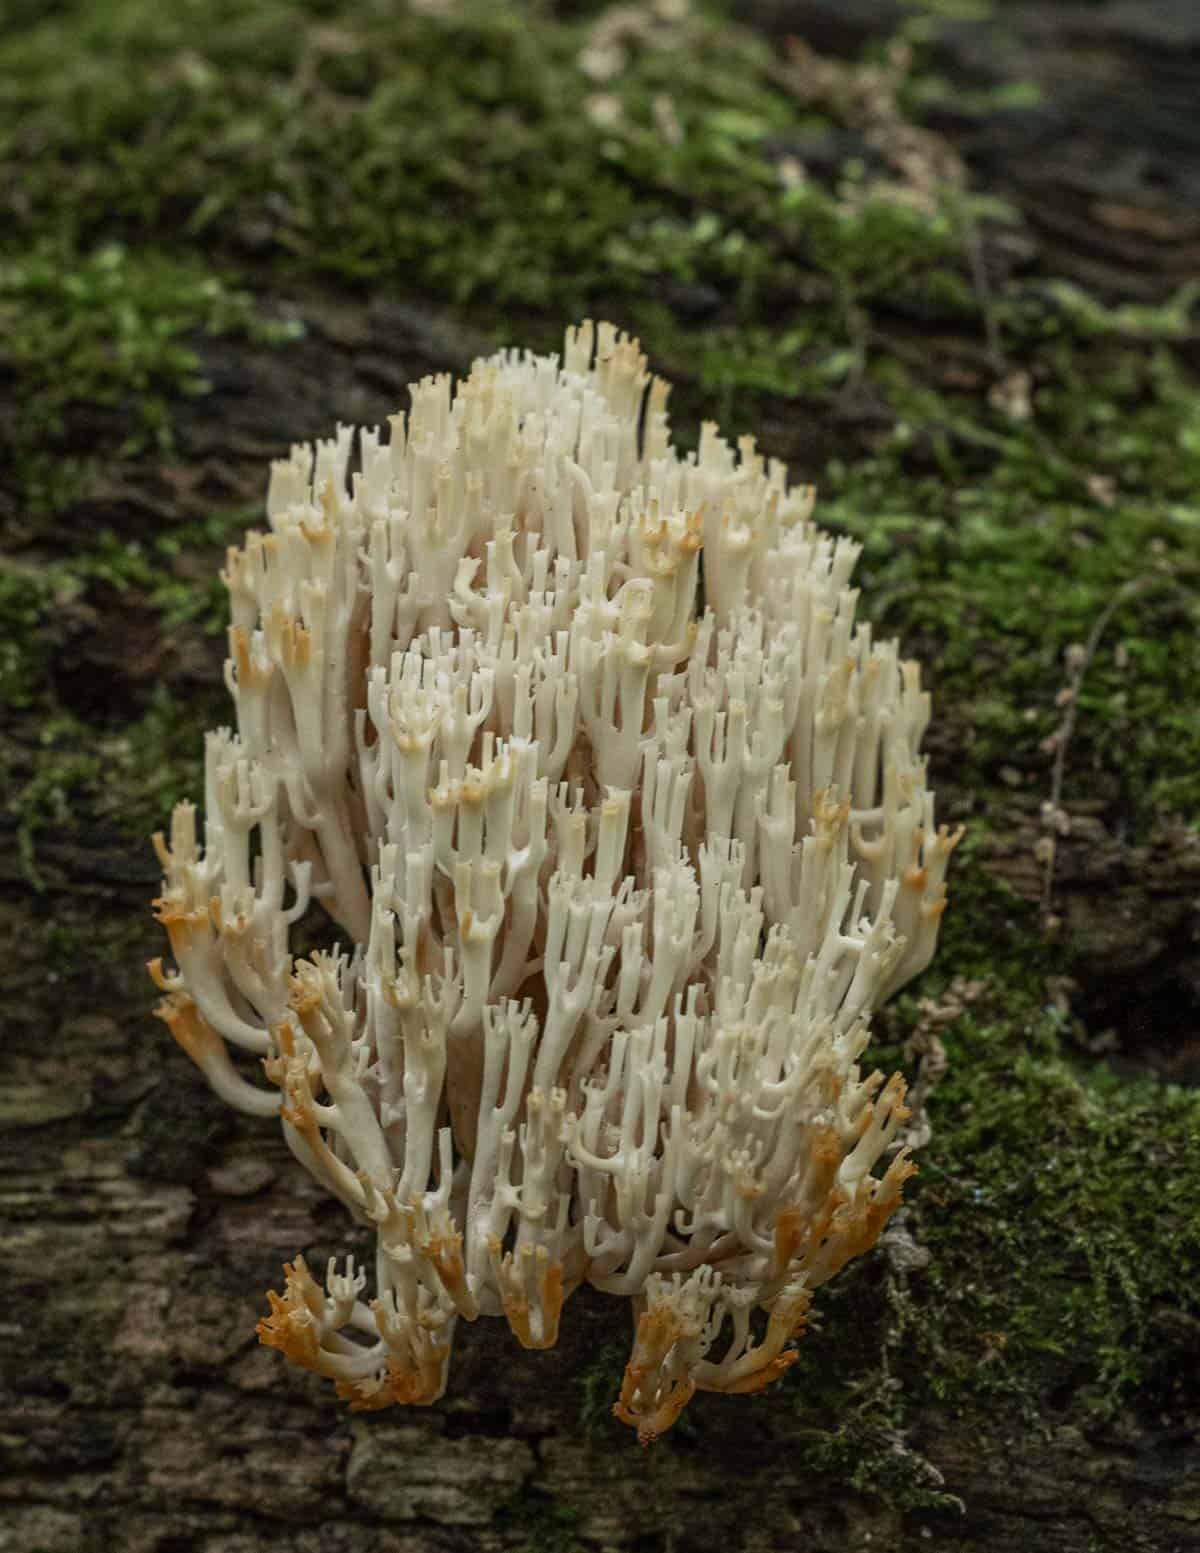 Artomyces pyxidatus, the crown tipped coral mushroom growing on a log. 